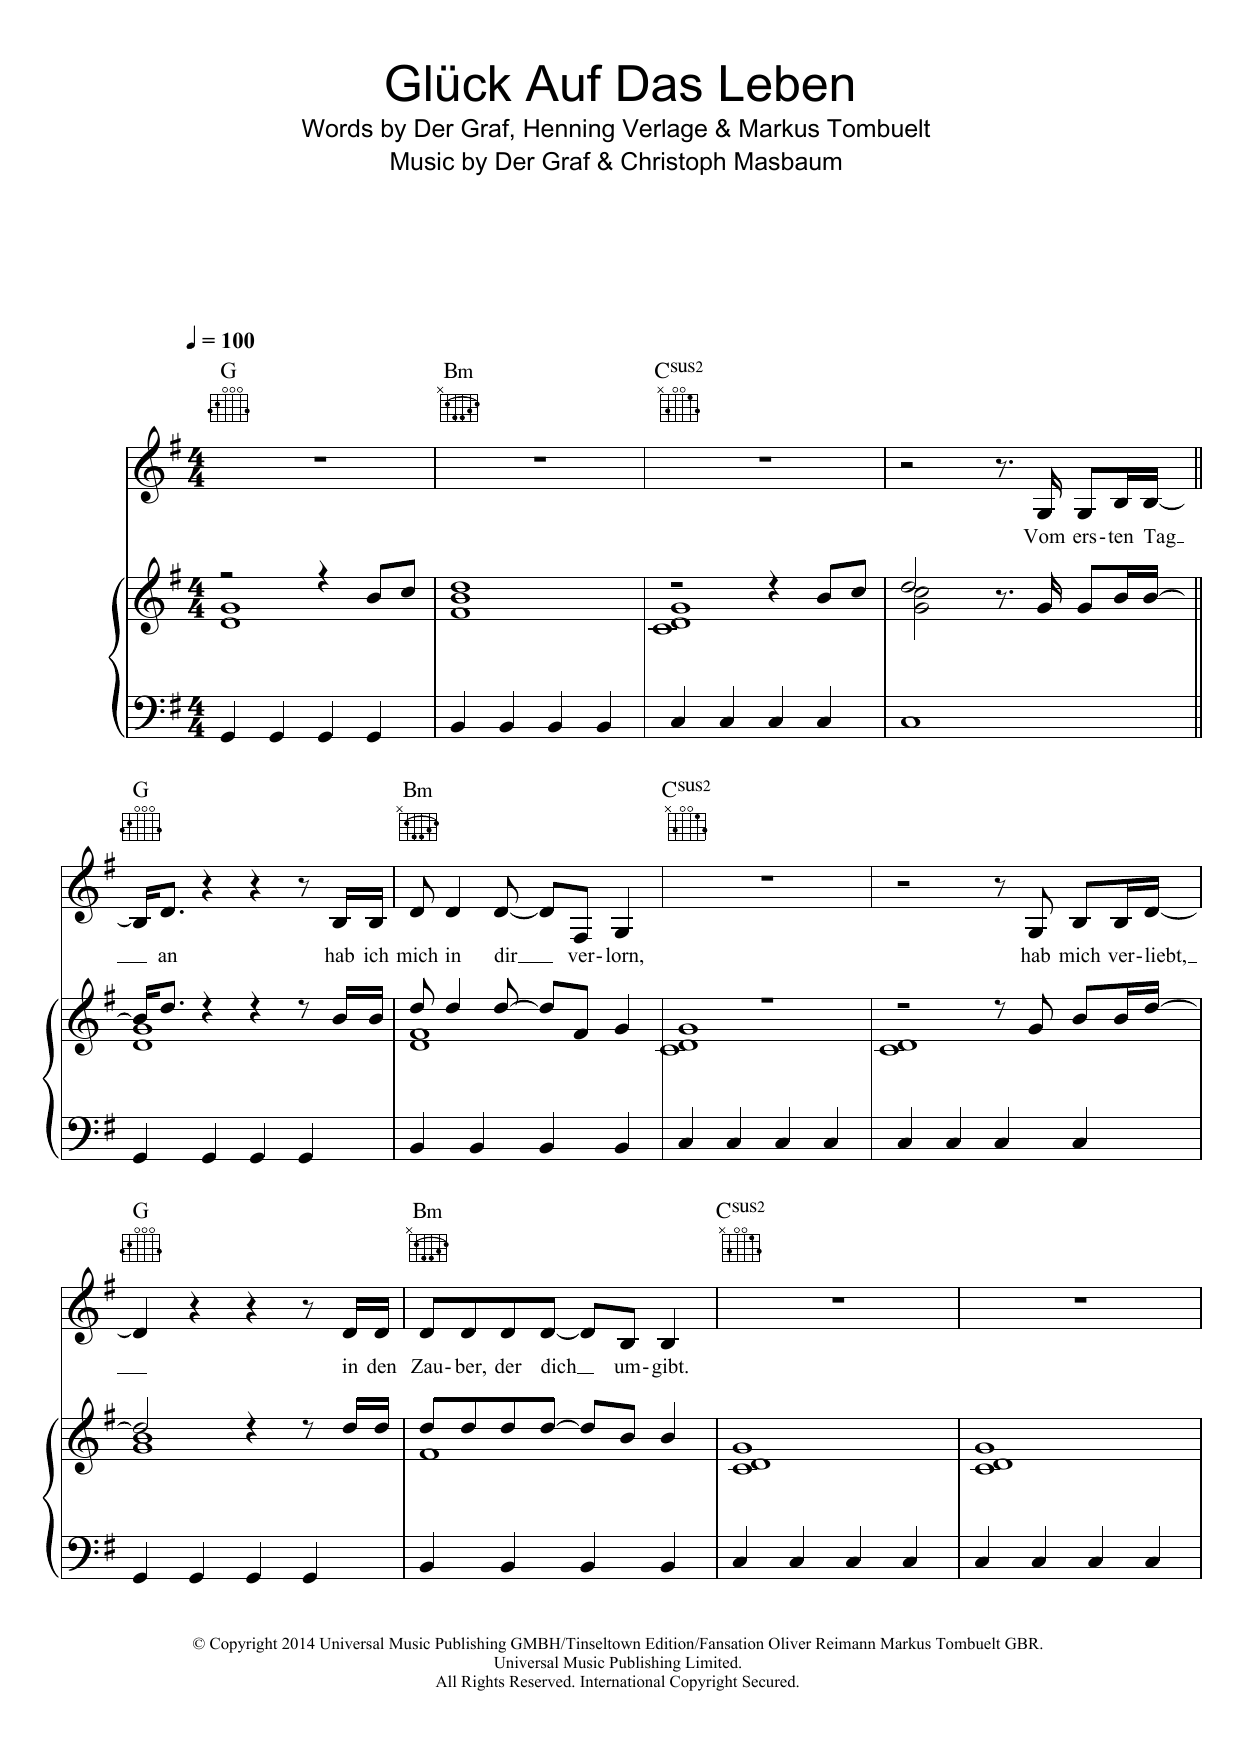 Unheilig Gluck Auf Das Leben sheet music notes and chords arranged for Piano, Vocal & Guitar Chords